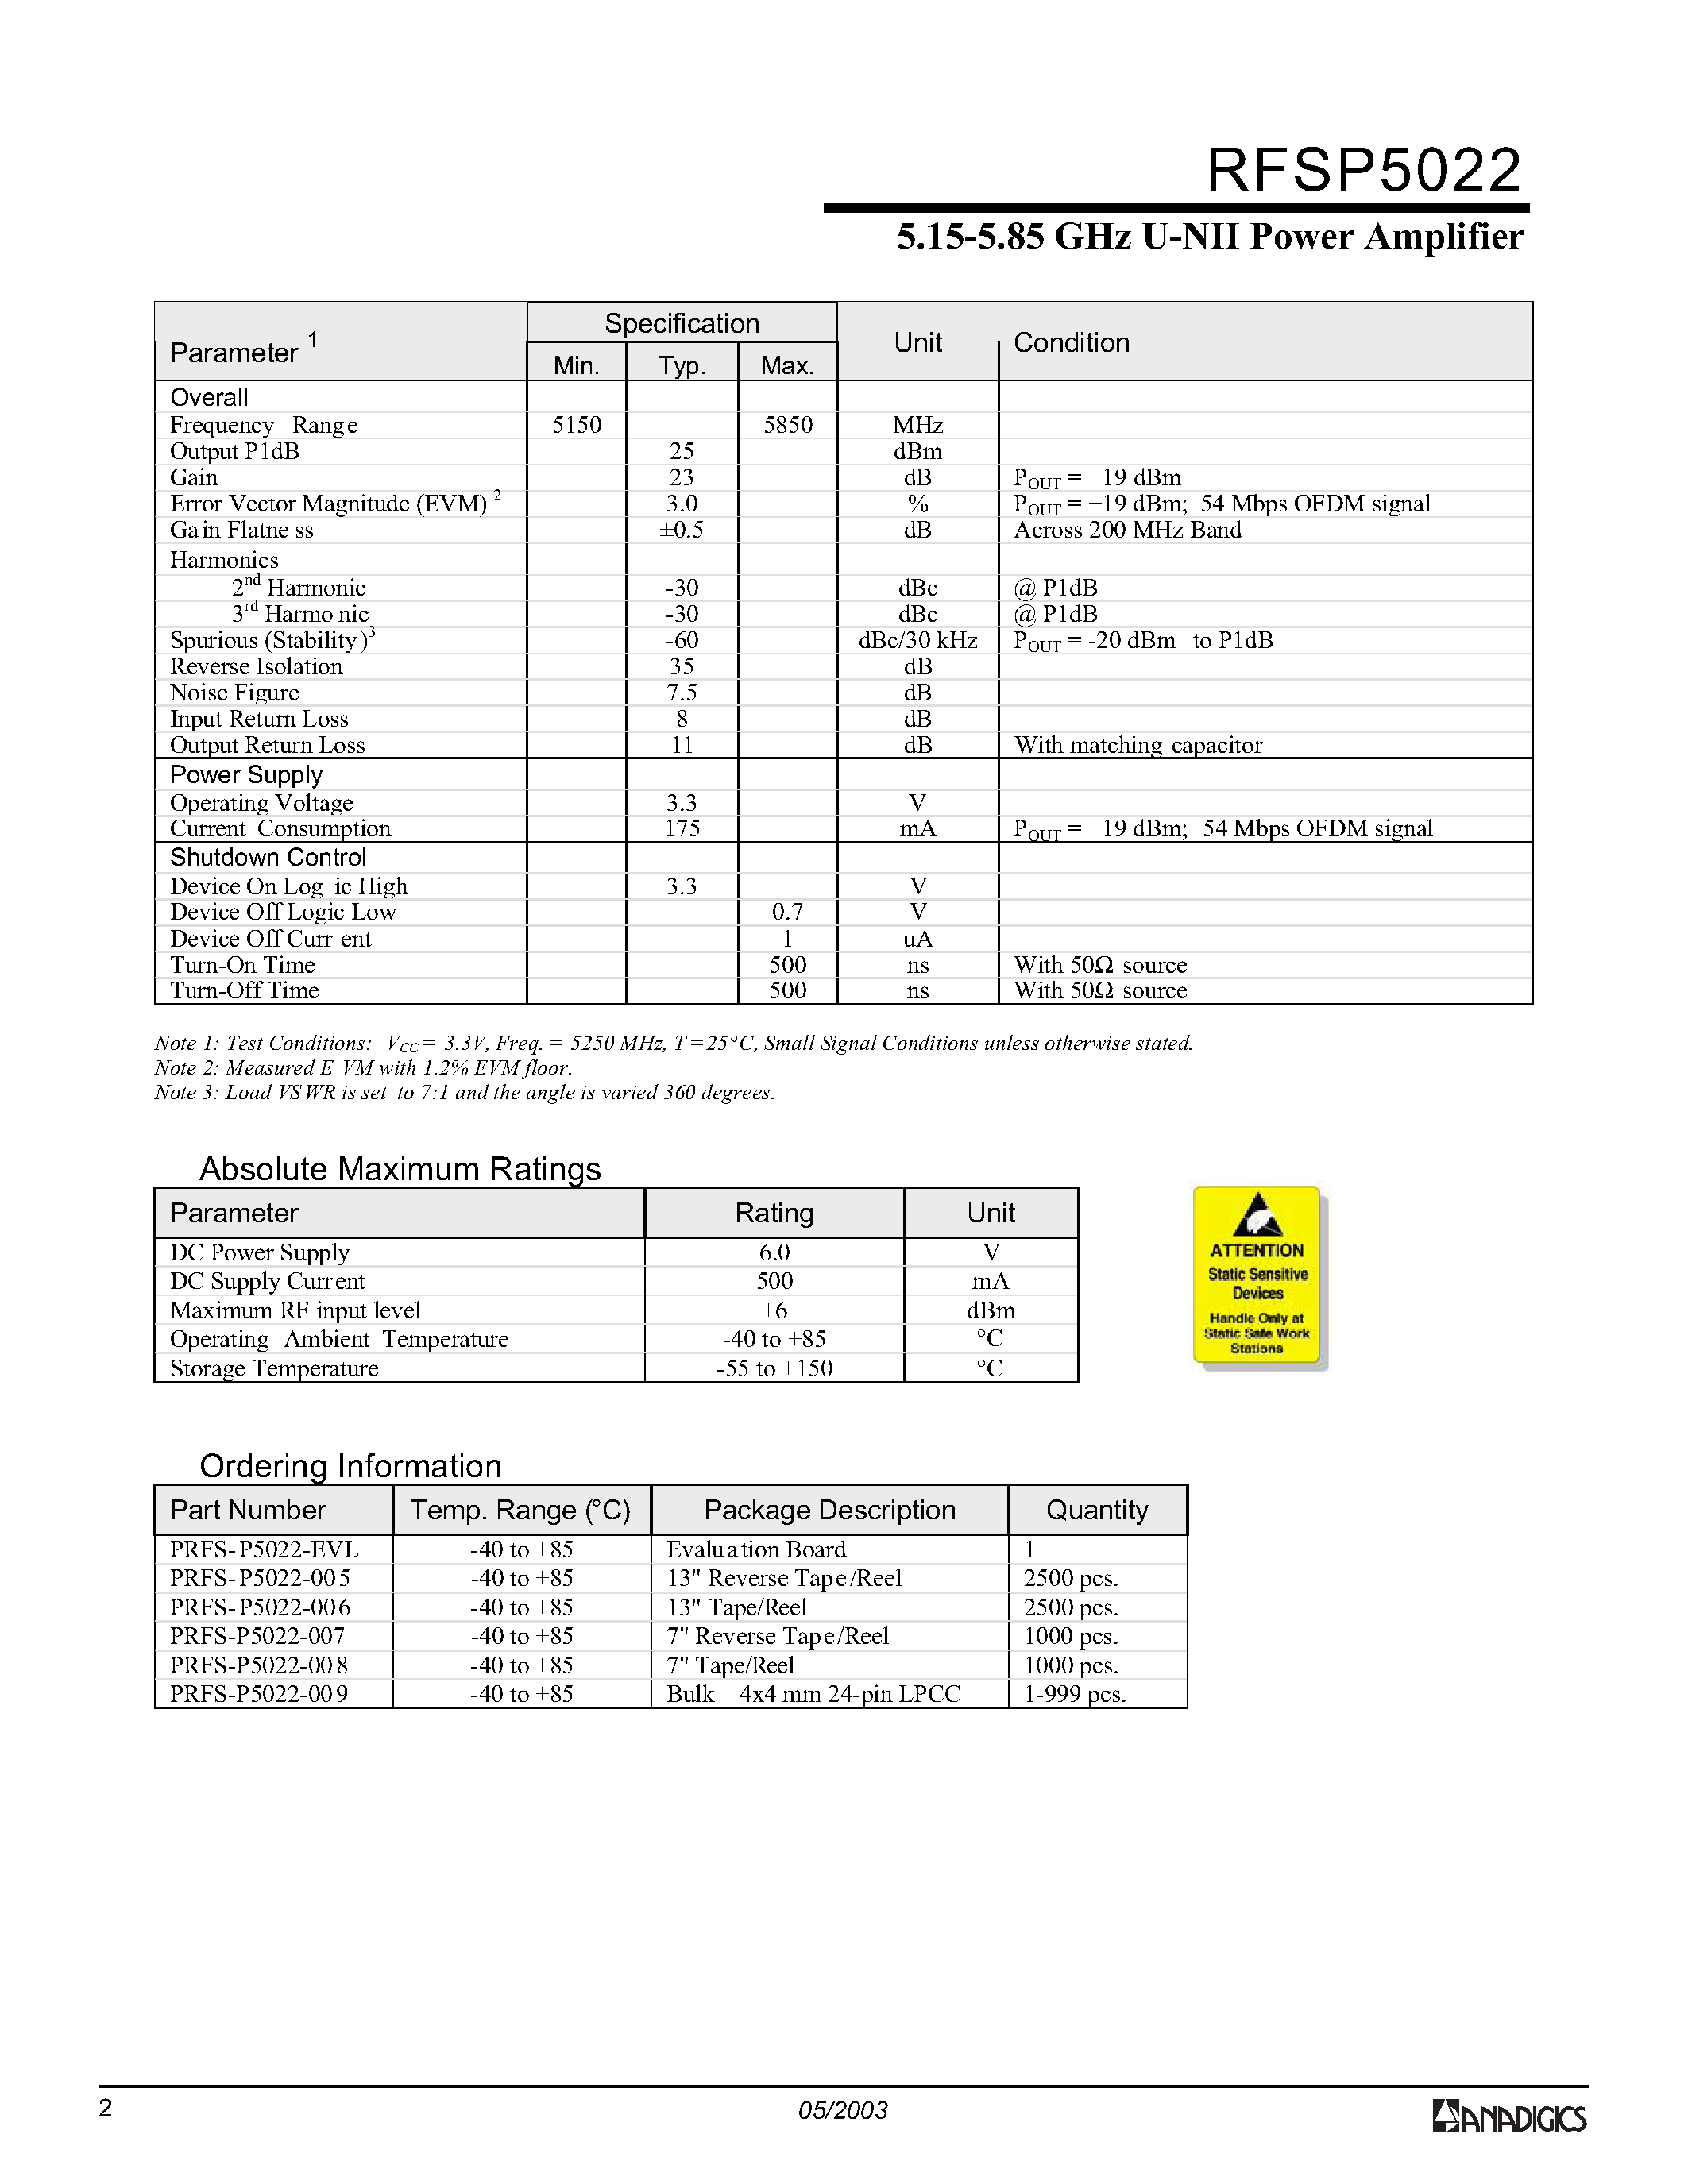 Даташит PRFS-P5022-008 - 5.15-5.85 GHz U-NII Power Amplifier страница 2